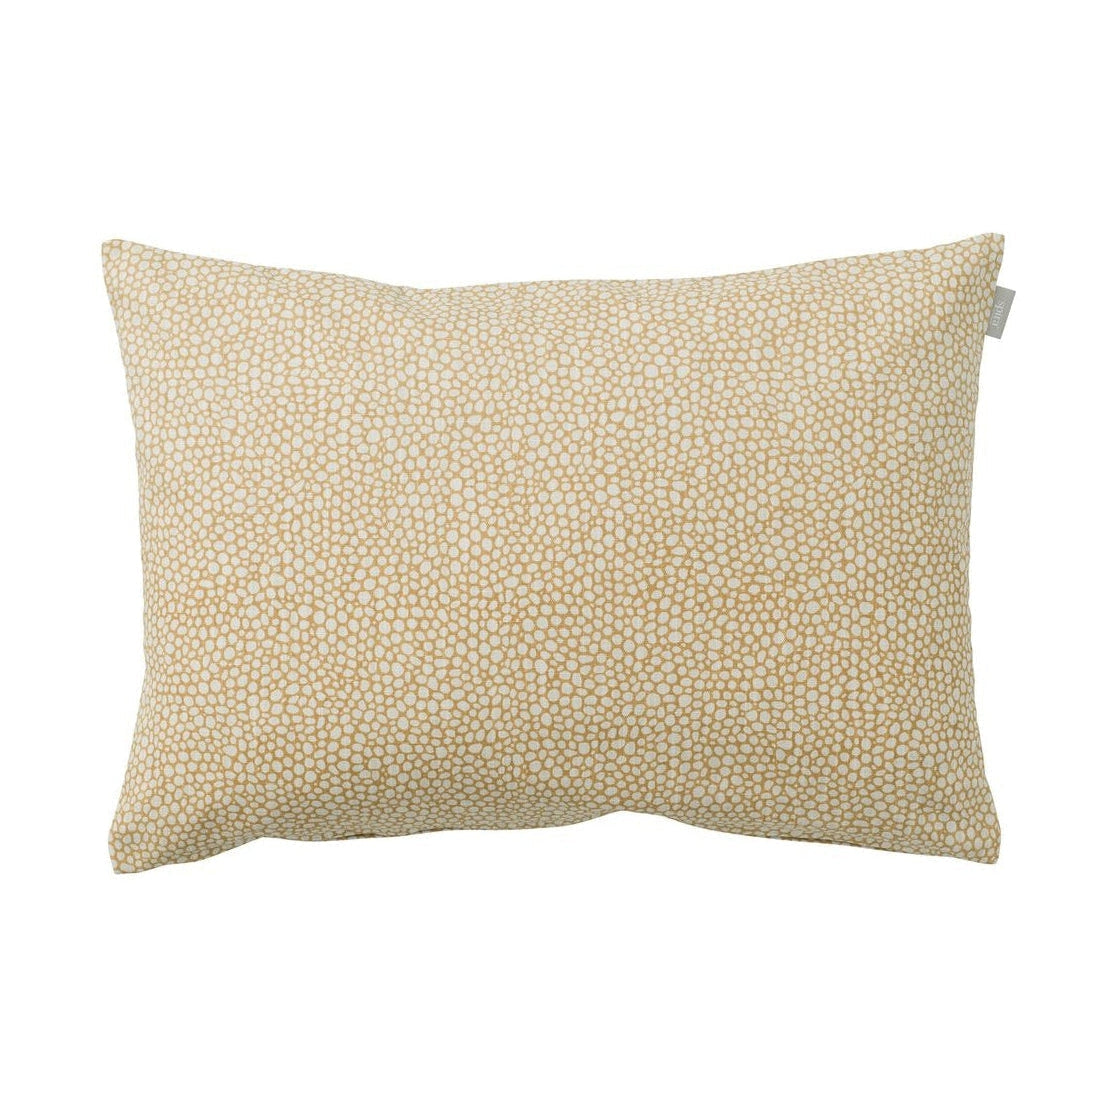 Spira Dotte R60 Pillow Cover, Honey